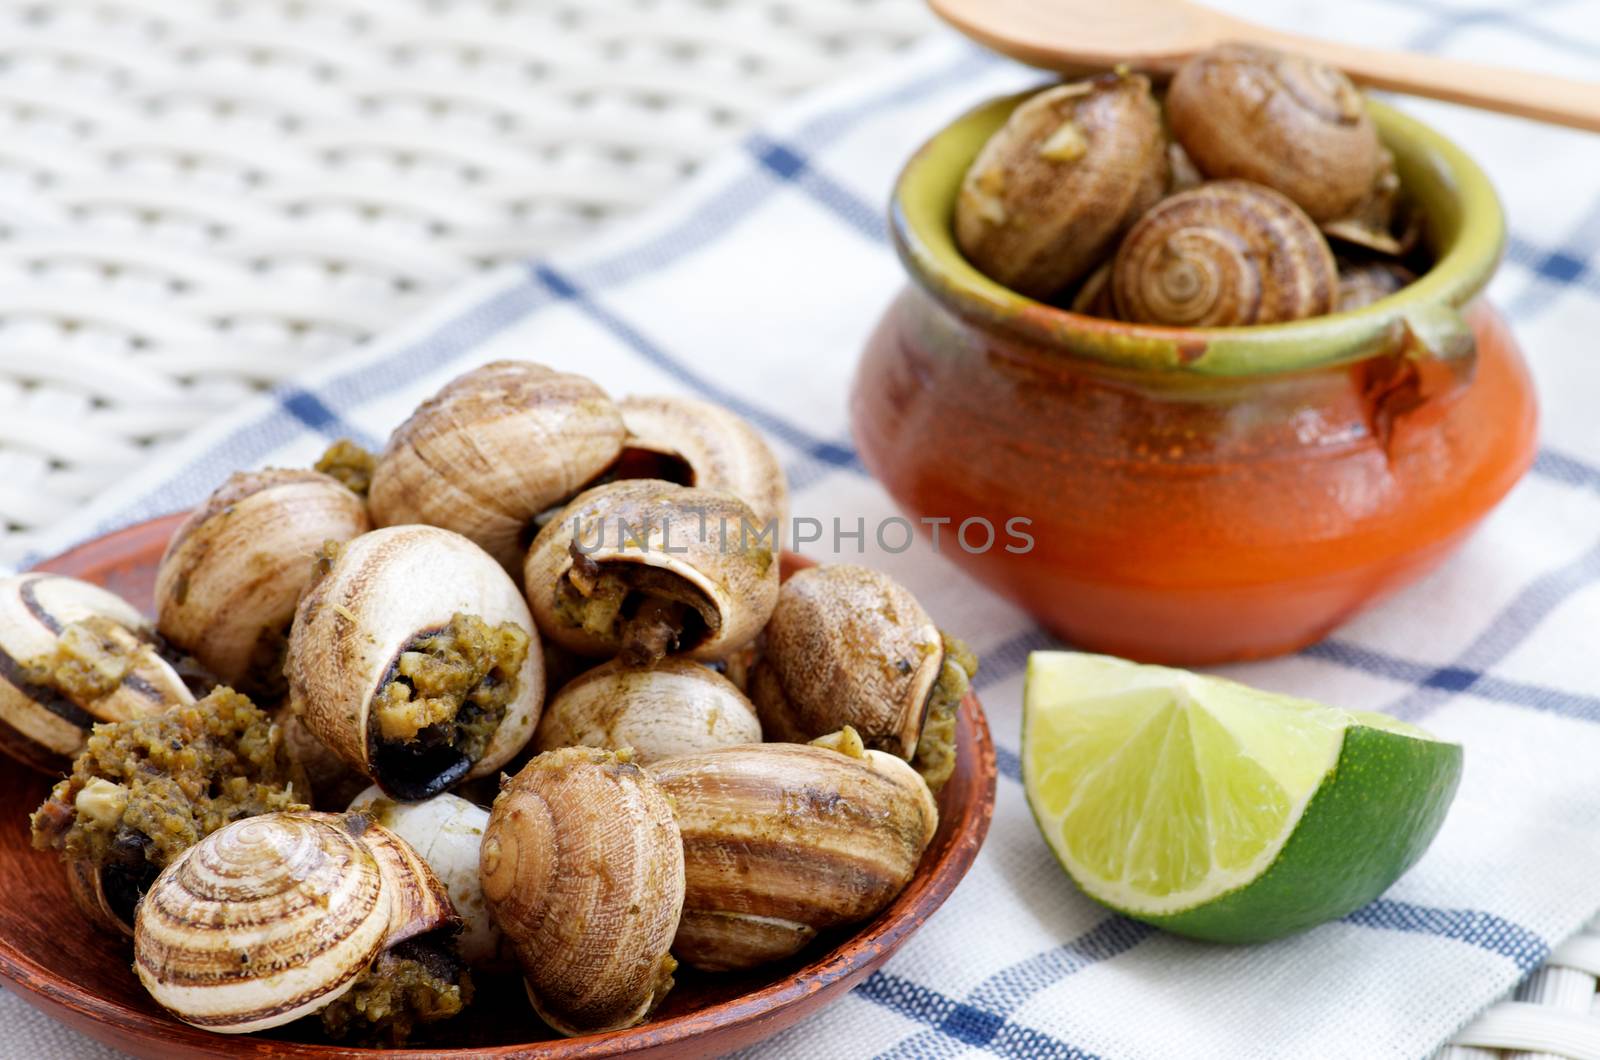 Snails with Garlic Butter by zhekos